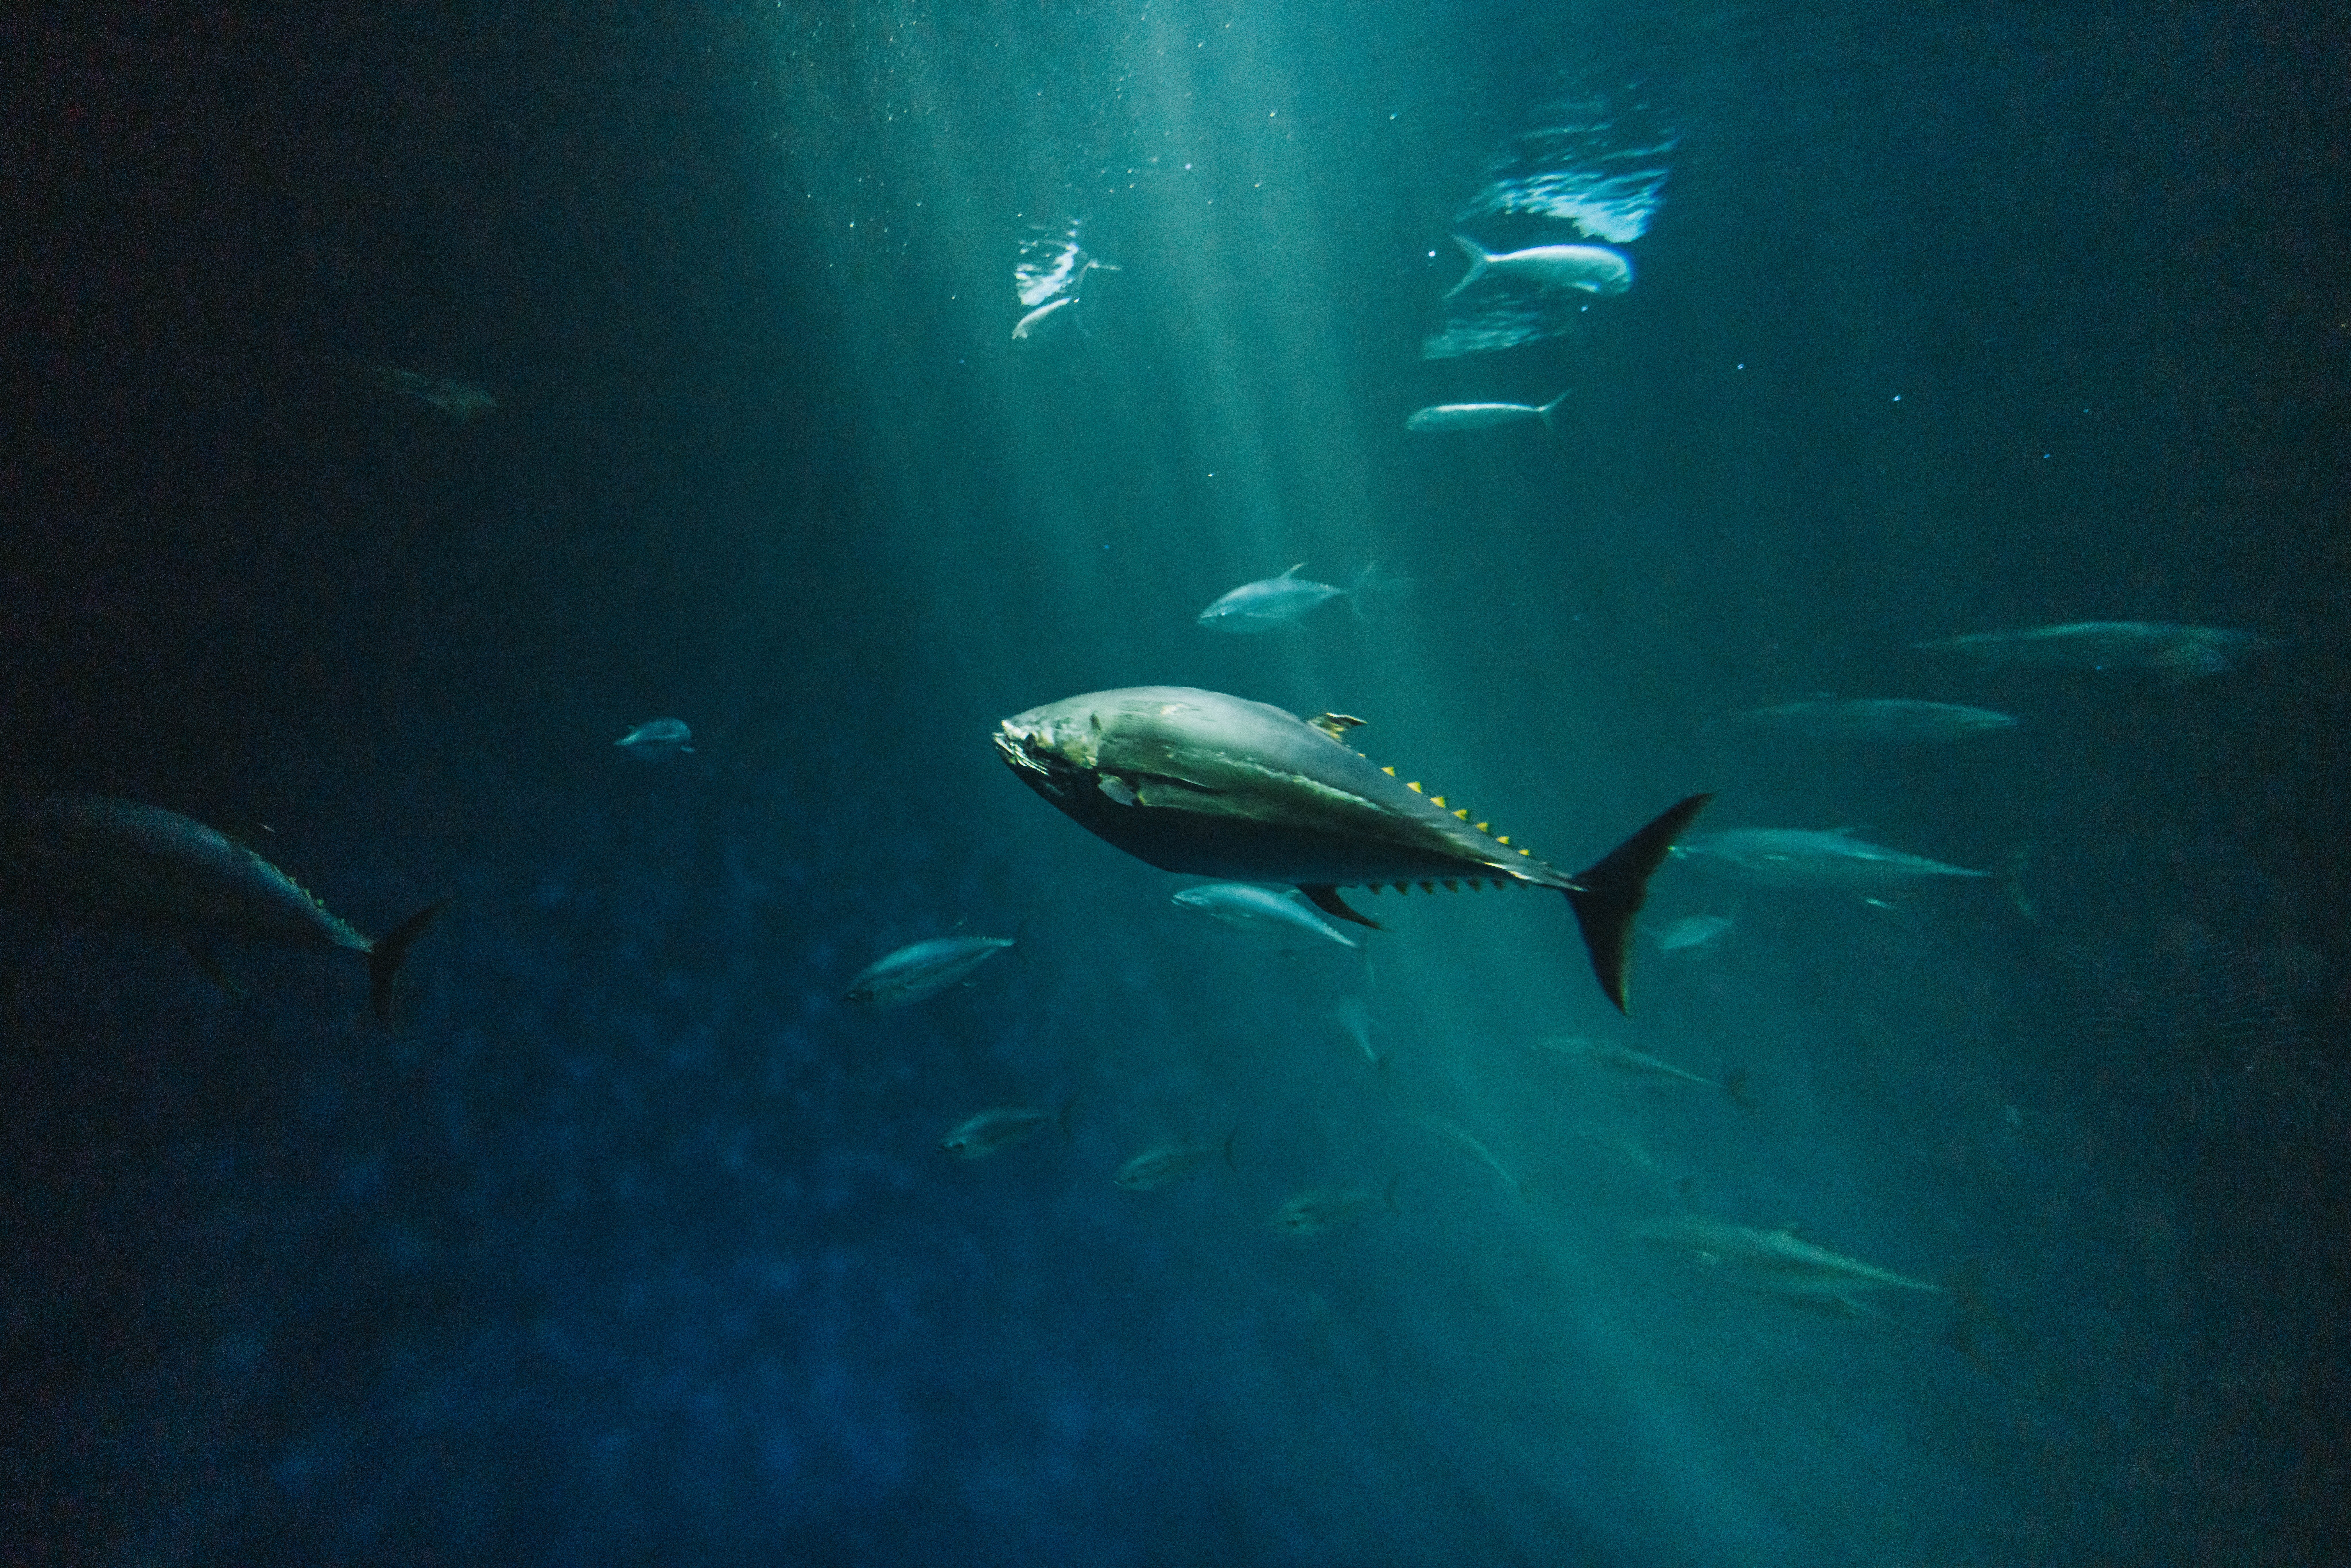 A bluefin tuna swimming in the open ocean.